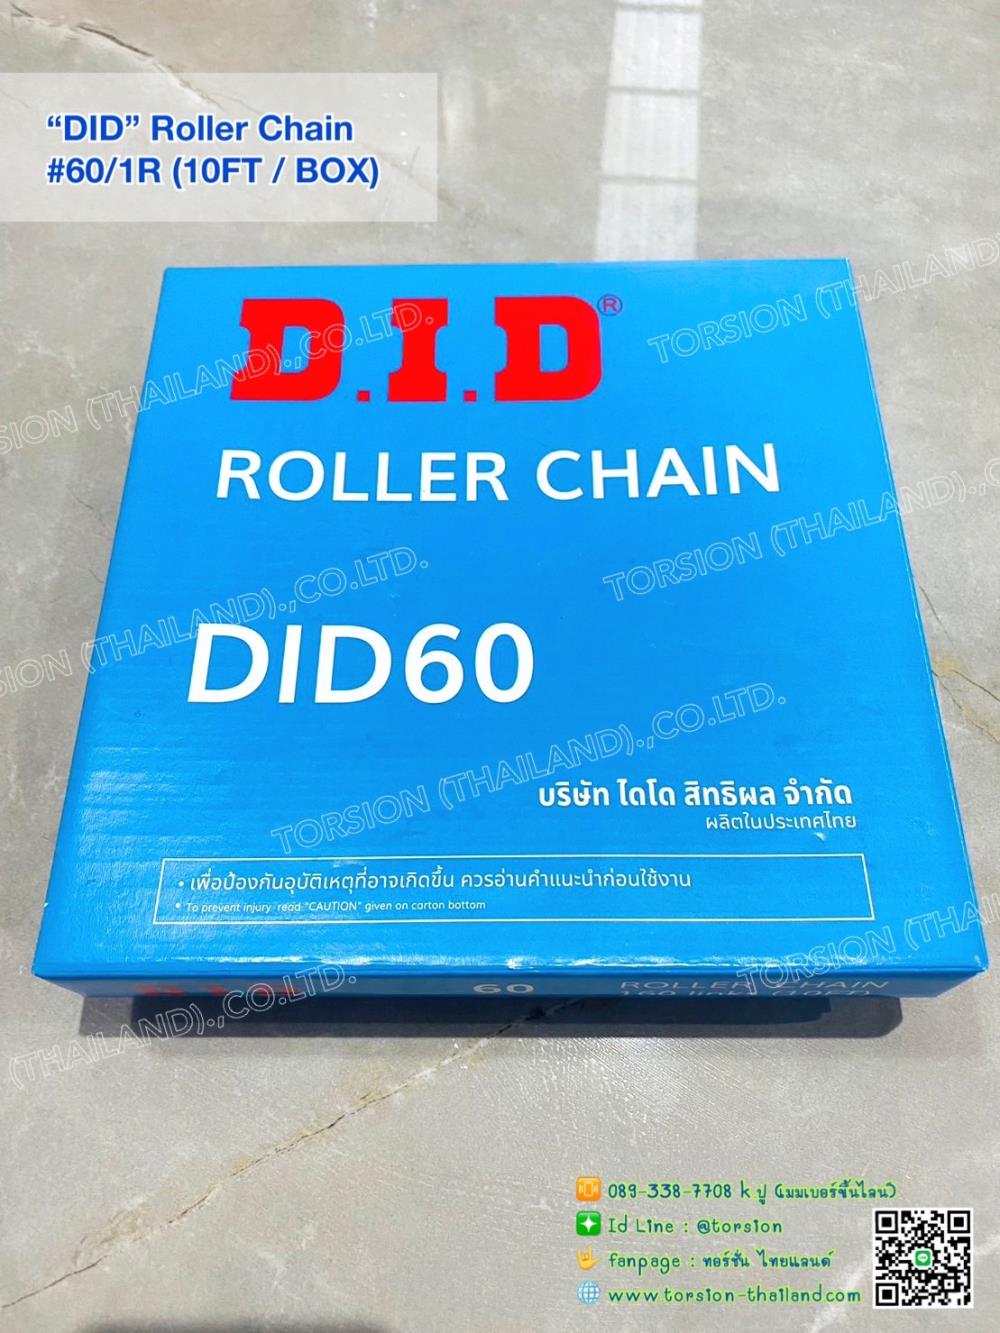 "DID" Chain drive #60 โซ่เบอร์ 60